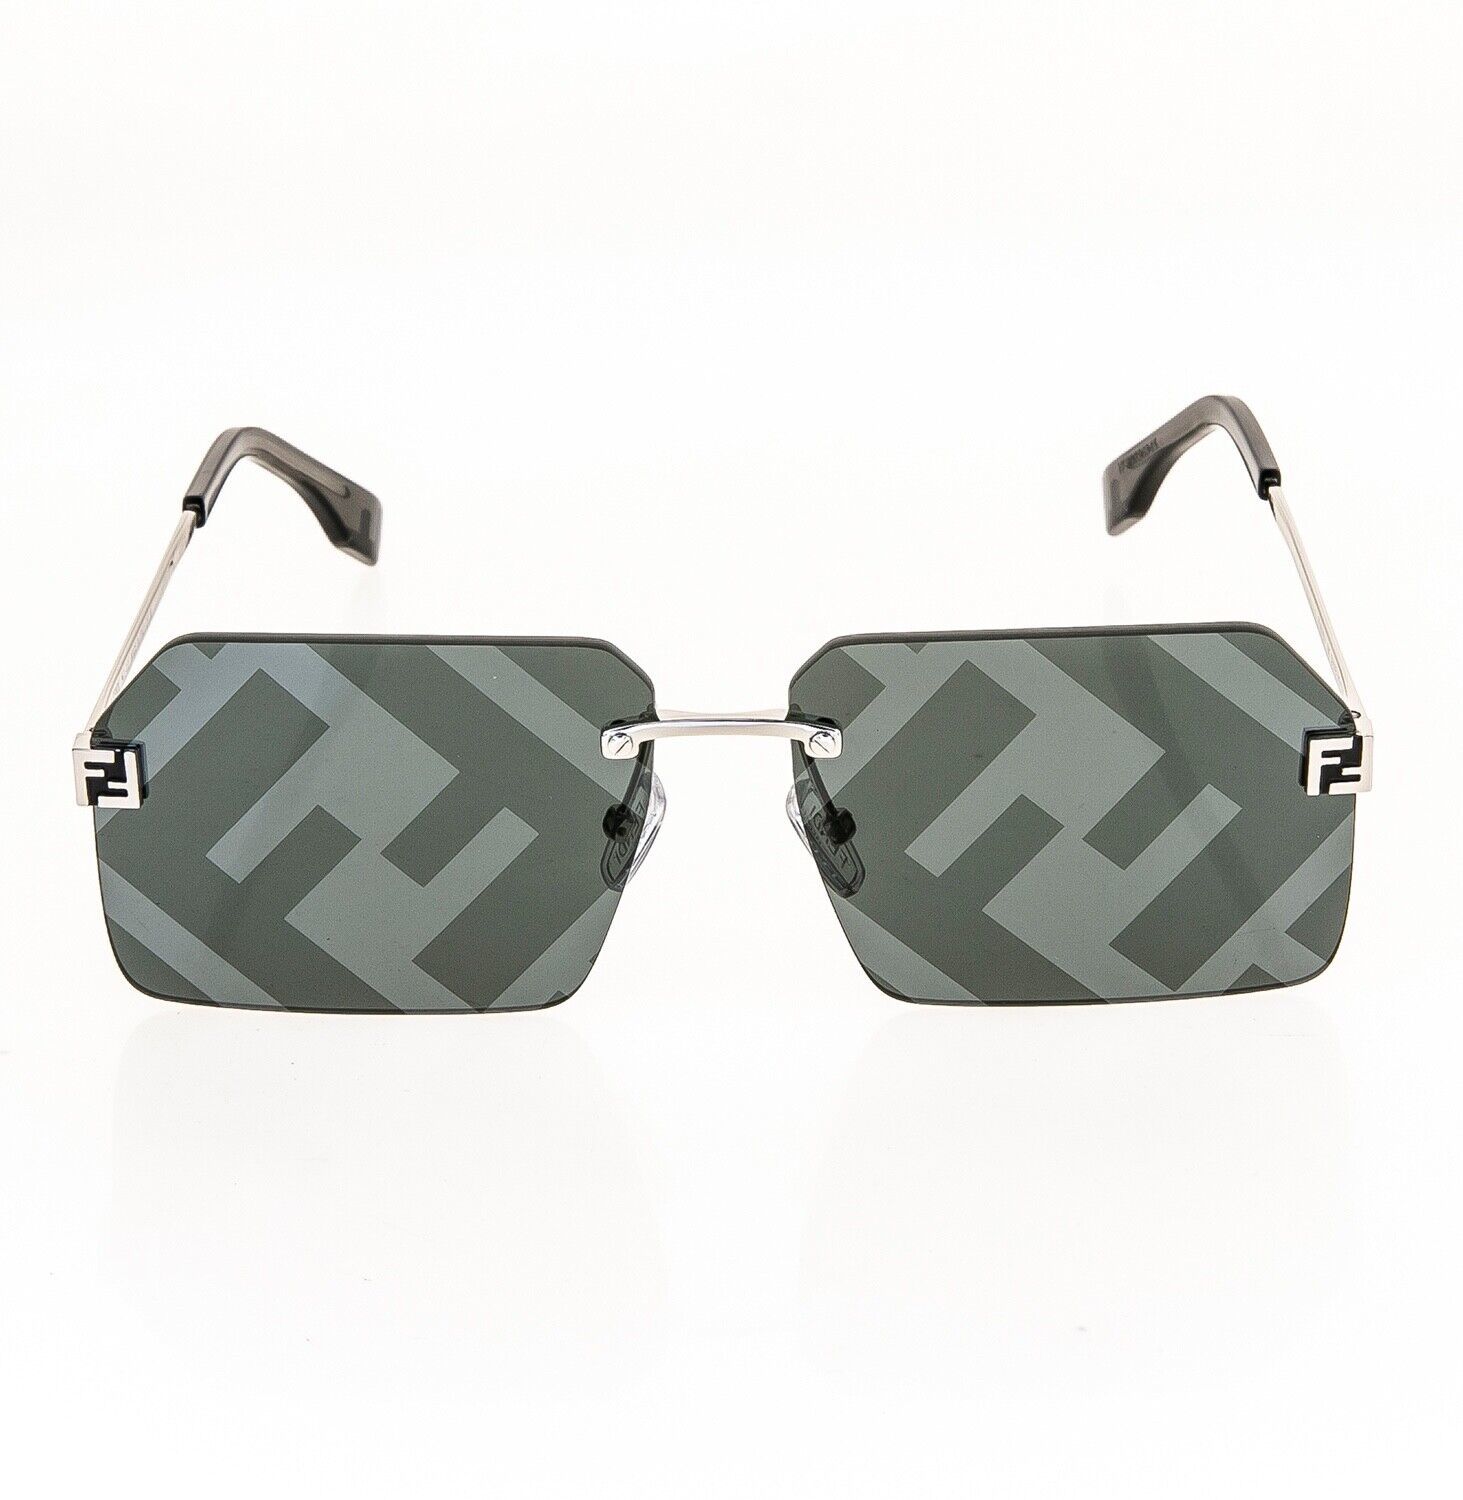 Black Sport Baguette mask-frame acetate sunglasses, Fendi